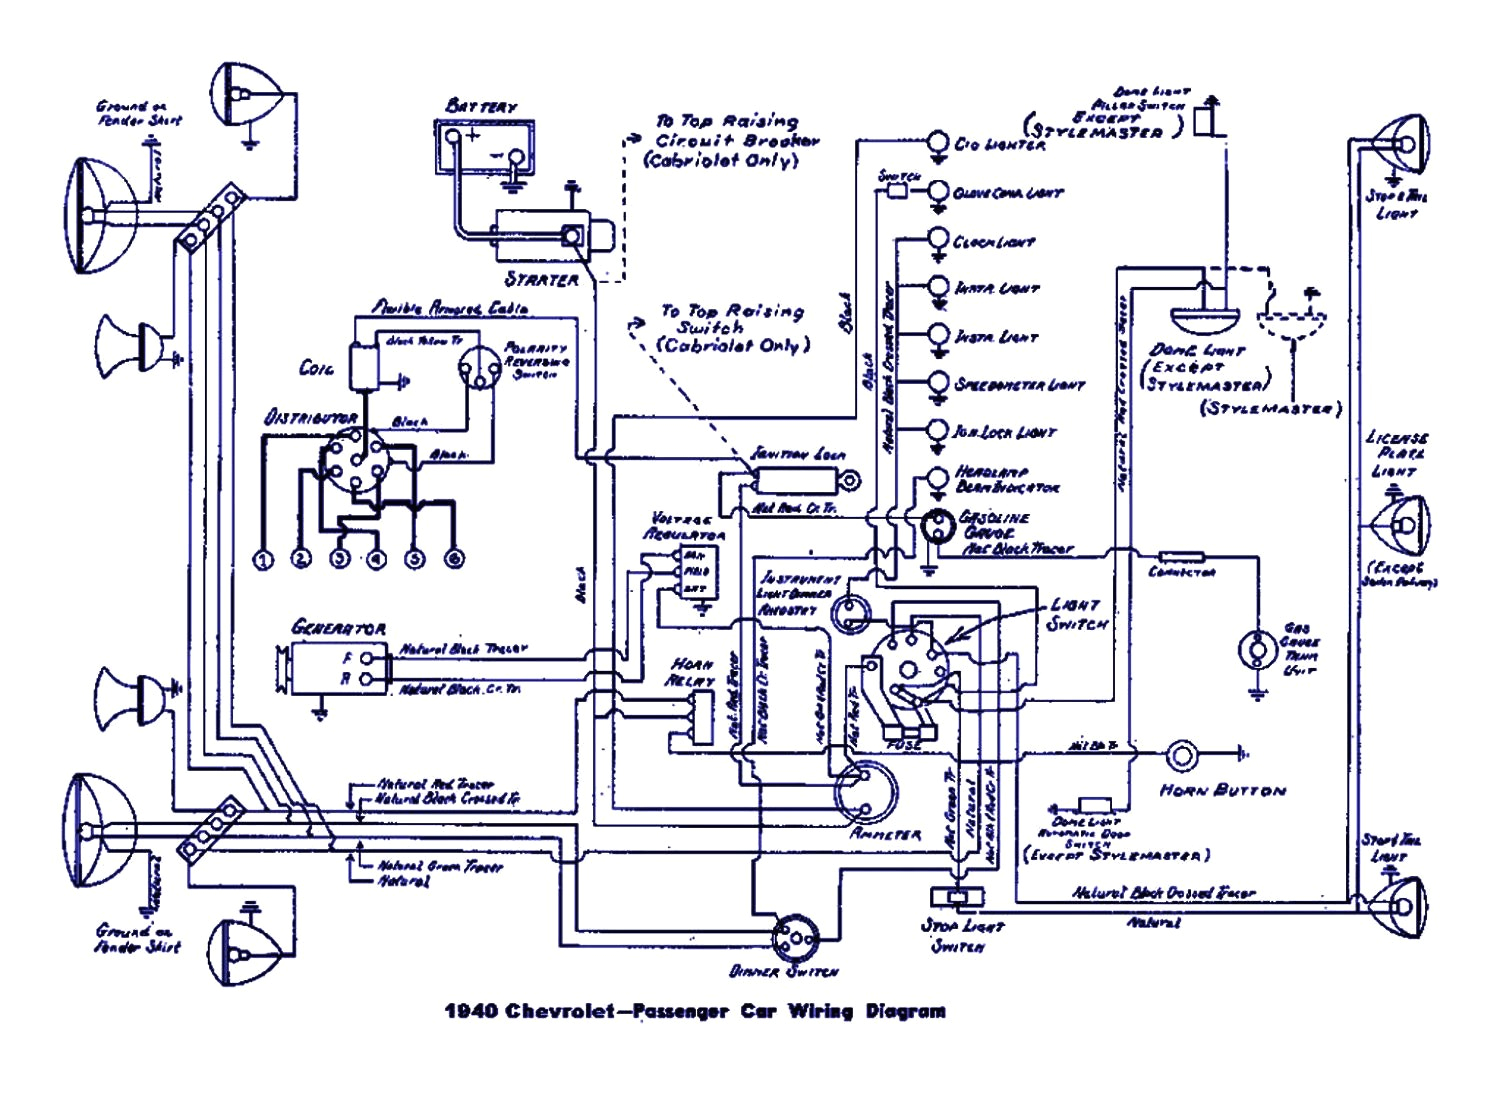 ezgo txt wiring diagram 48 blog wiring diagram 48 volt ezgo golf cart battery wiring diagram 48 volt ezgo wiring diagram